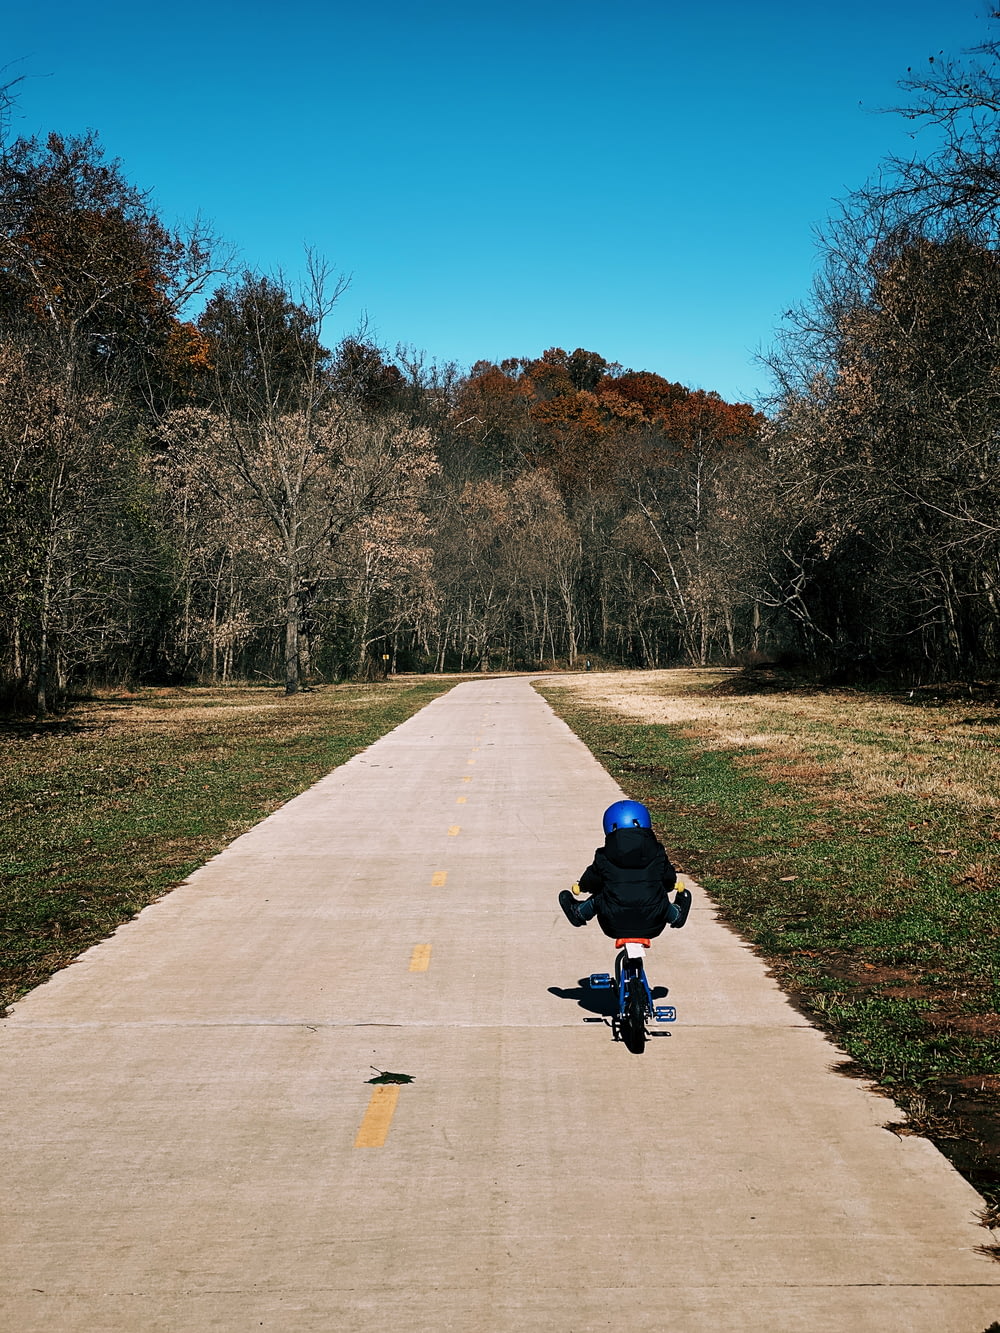 child biking on road near green field during daytime